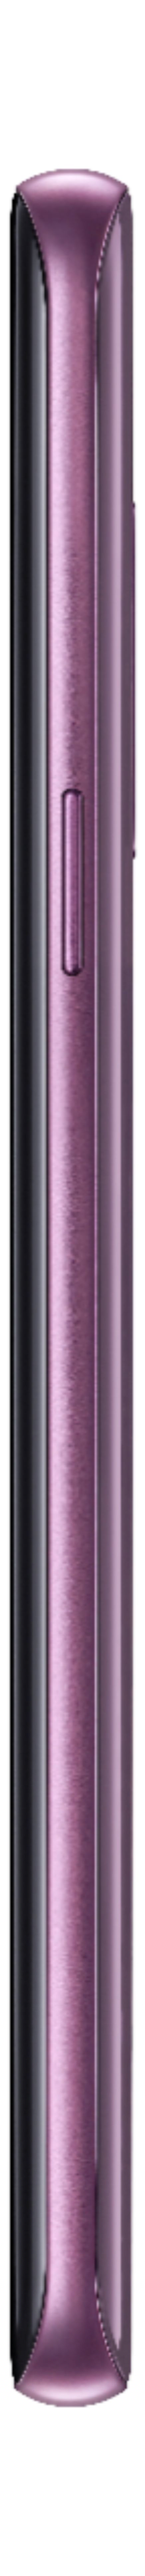 Best Buy: Samsung Galaxy S9 64GB (Unlocked) Lilac Purple SM-G960UZPAXAA